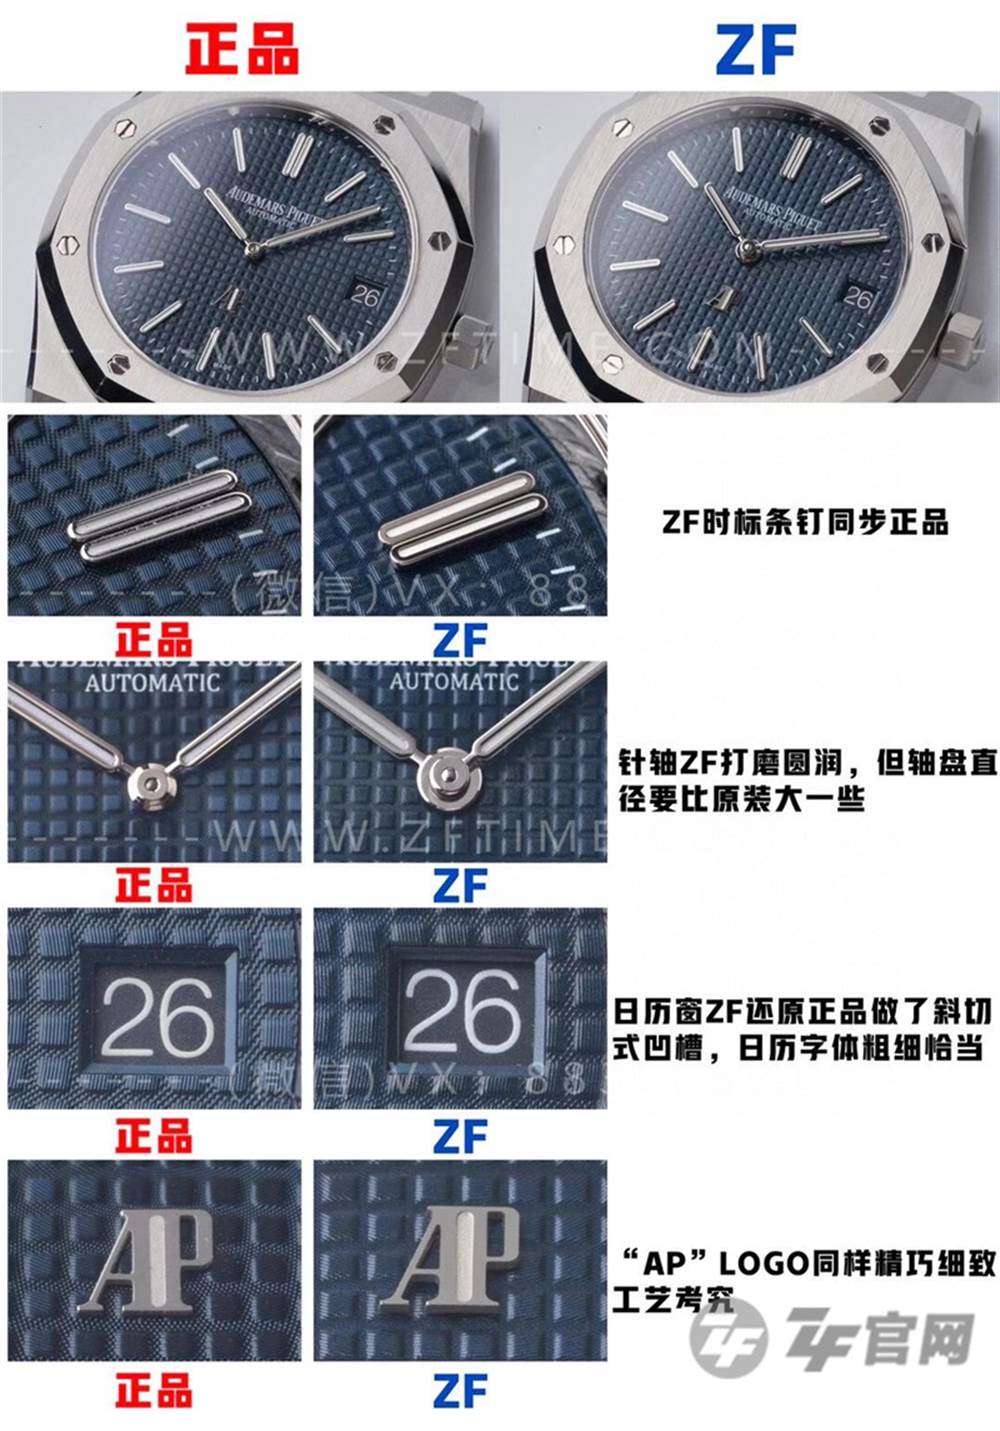 ZF厂AP爱彼皇家橡树系列15202ST腕表对比正品评测  第2张